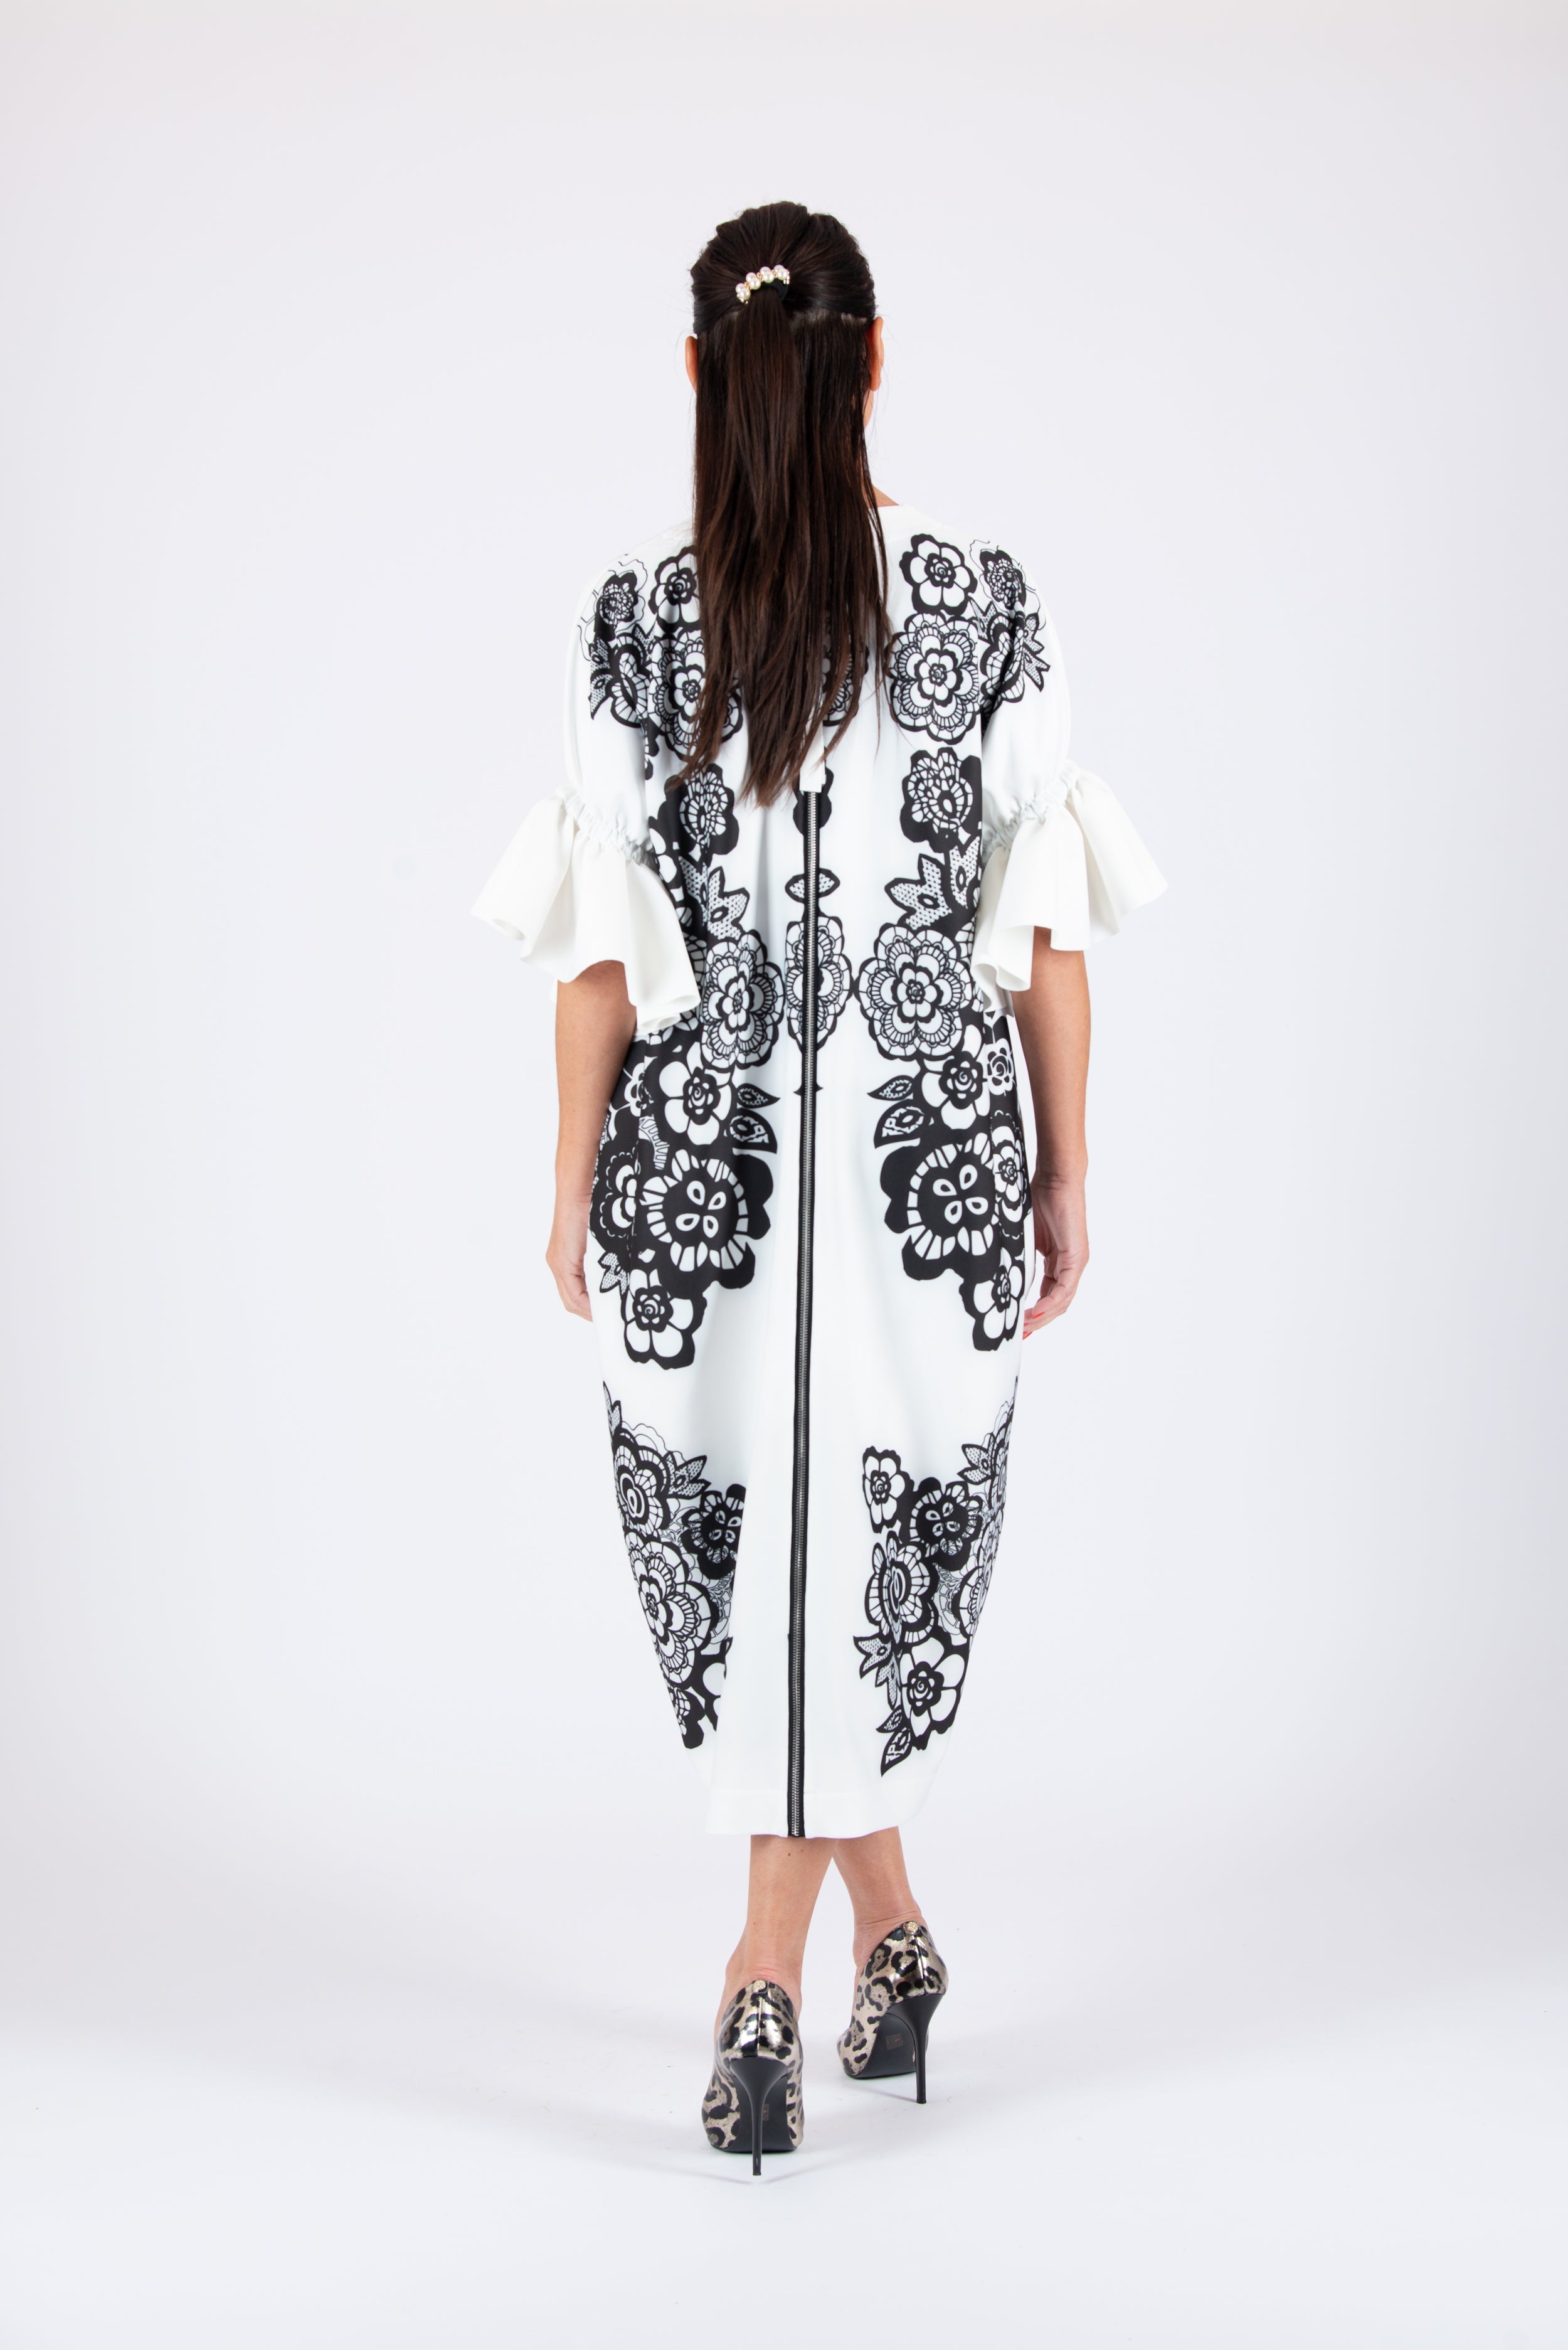 Black and White Winter Neoprene Dress by EUG Fashion